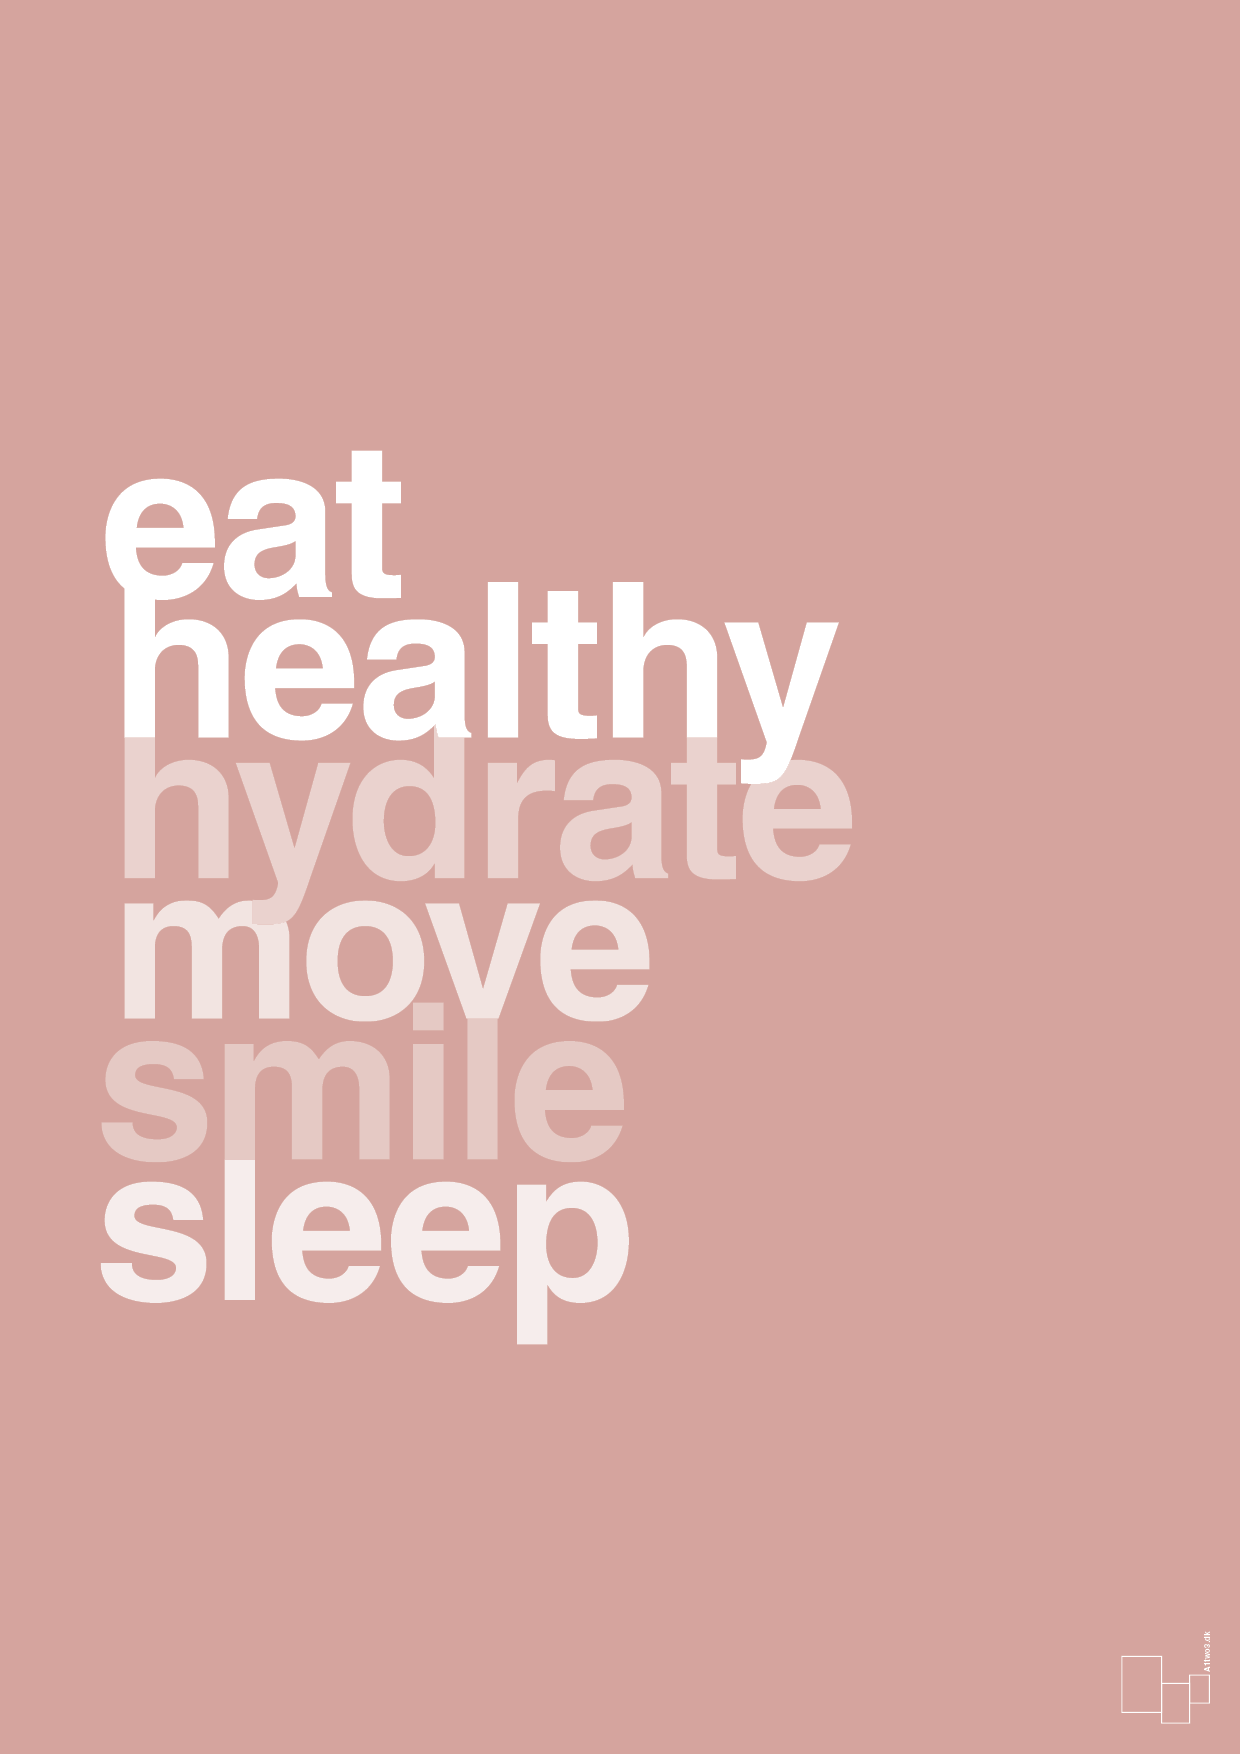 eat healthy hydrate move smile sleep - Plakat med Ordsprog i Bubble Shell